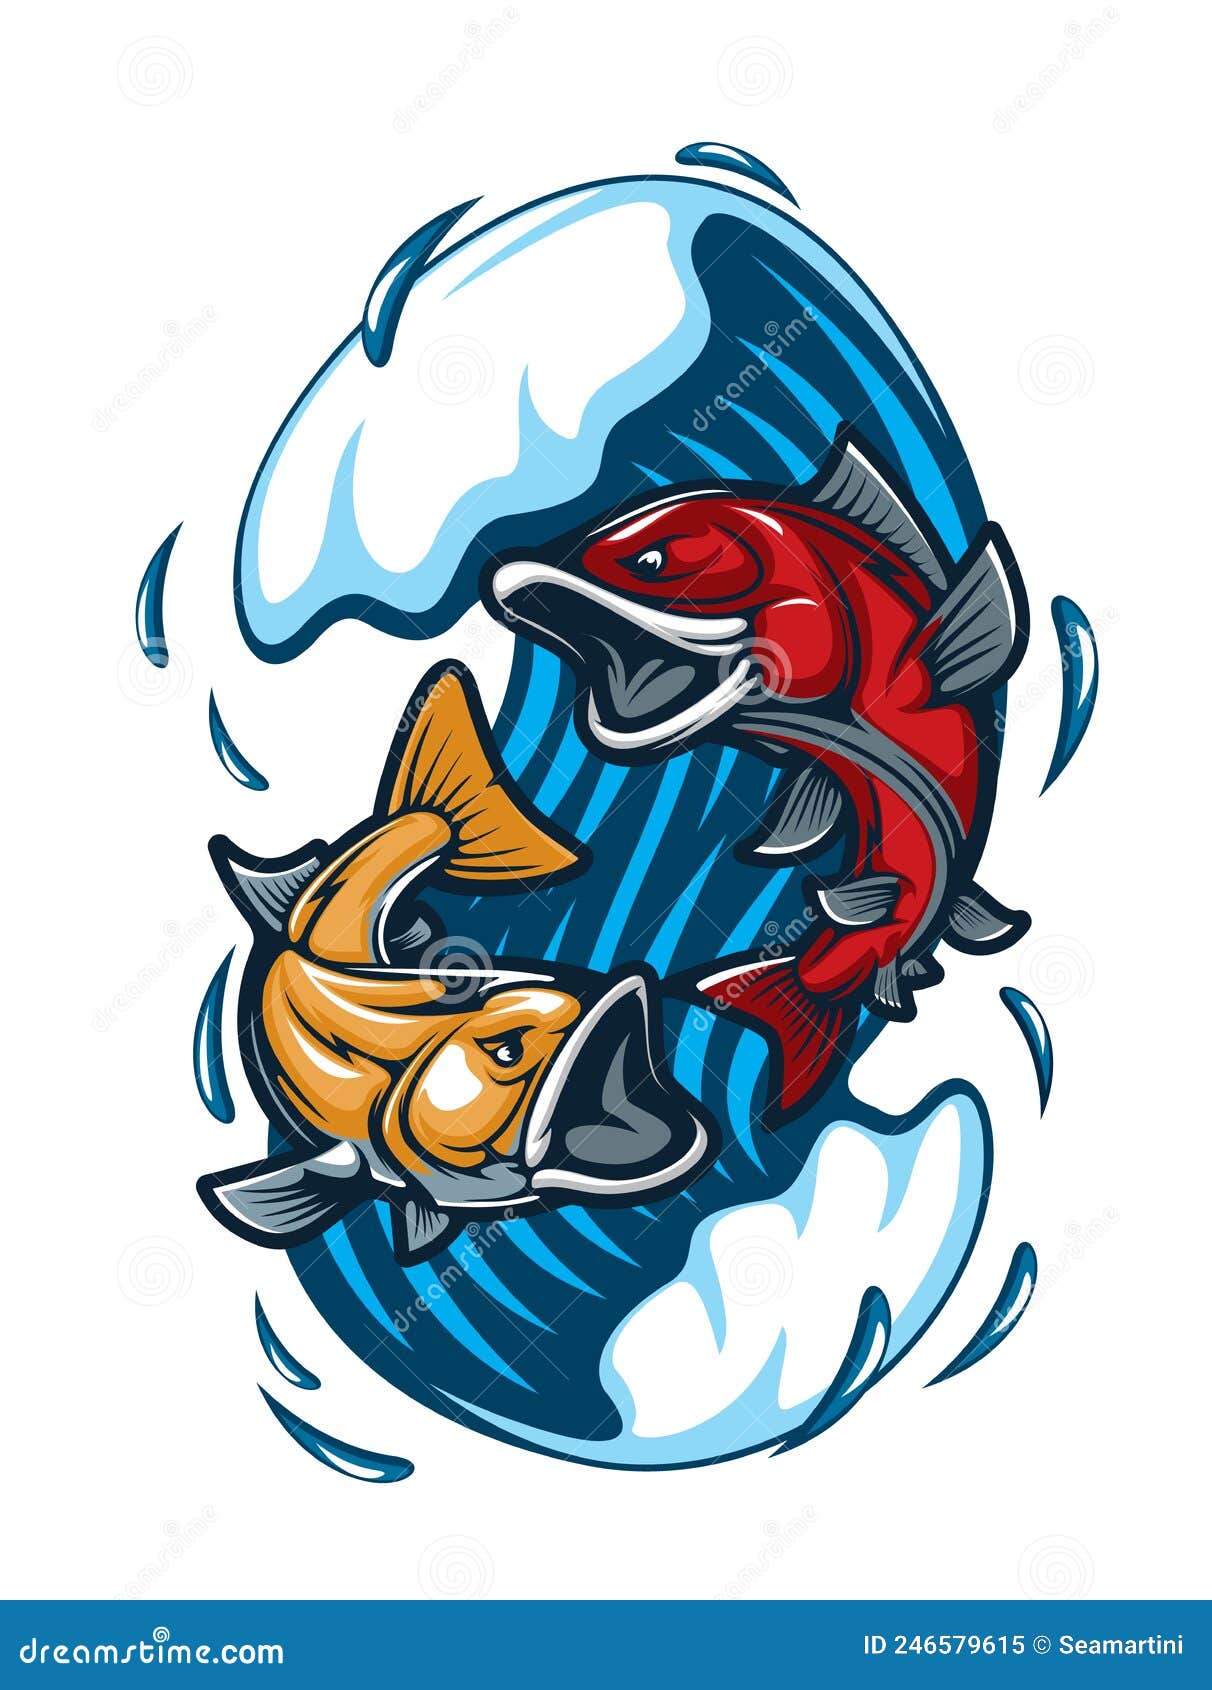 Mascot - Team Spirit Temporary Tattoo Set - Royal Blue